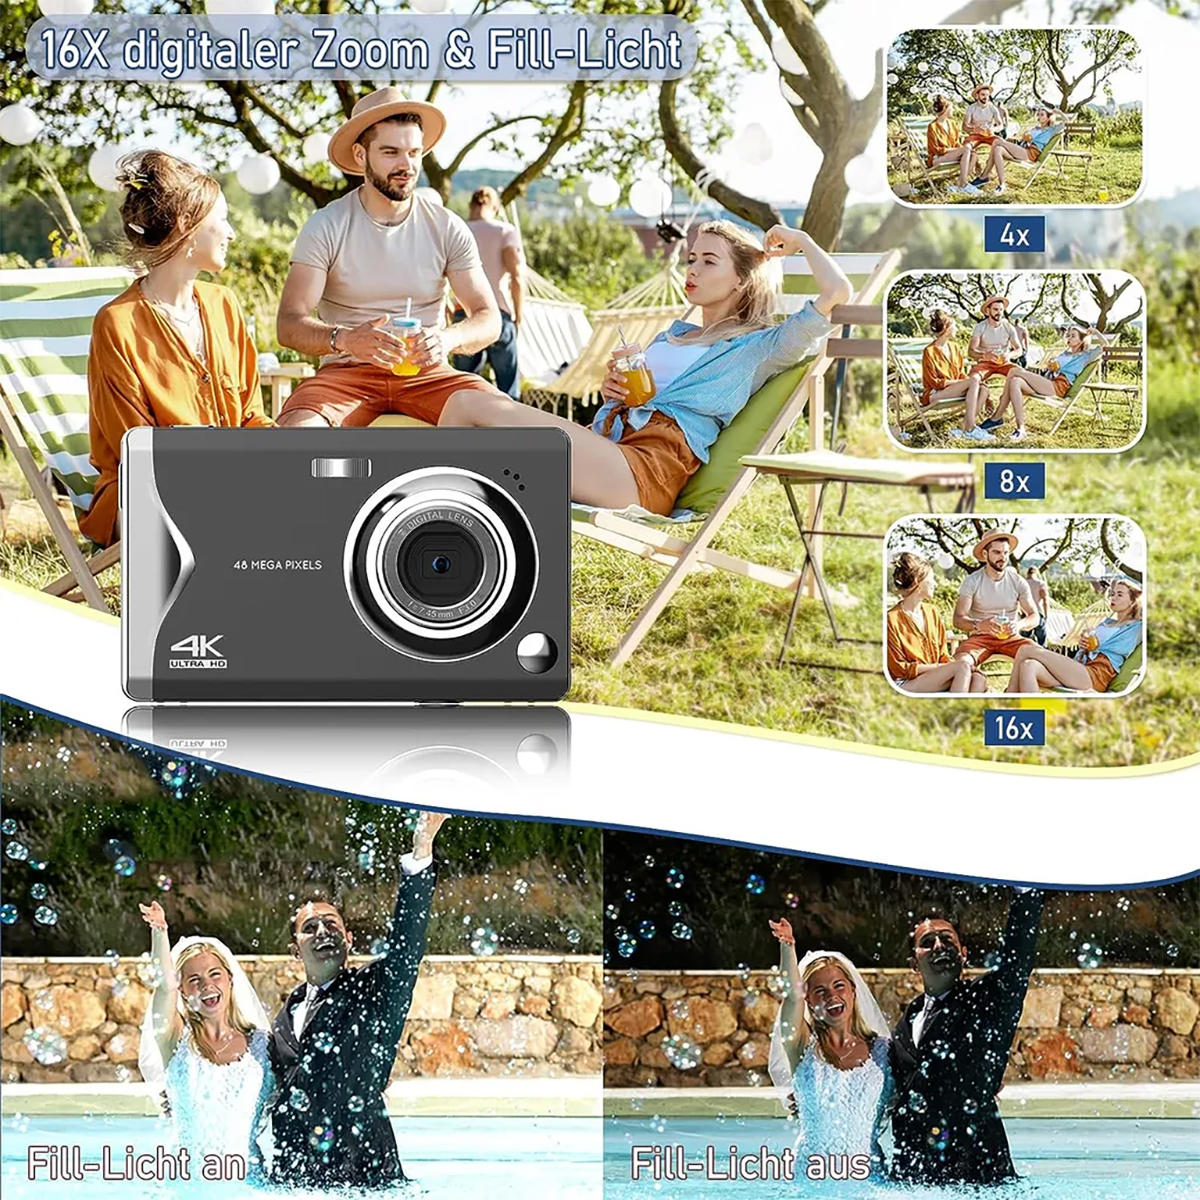 Schwarz SD-Karte, 48MP LINGDA 4K Digitalkamera Digitalzoom HD Fotokamera,32GB 16-facher